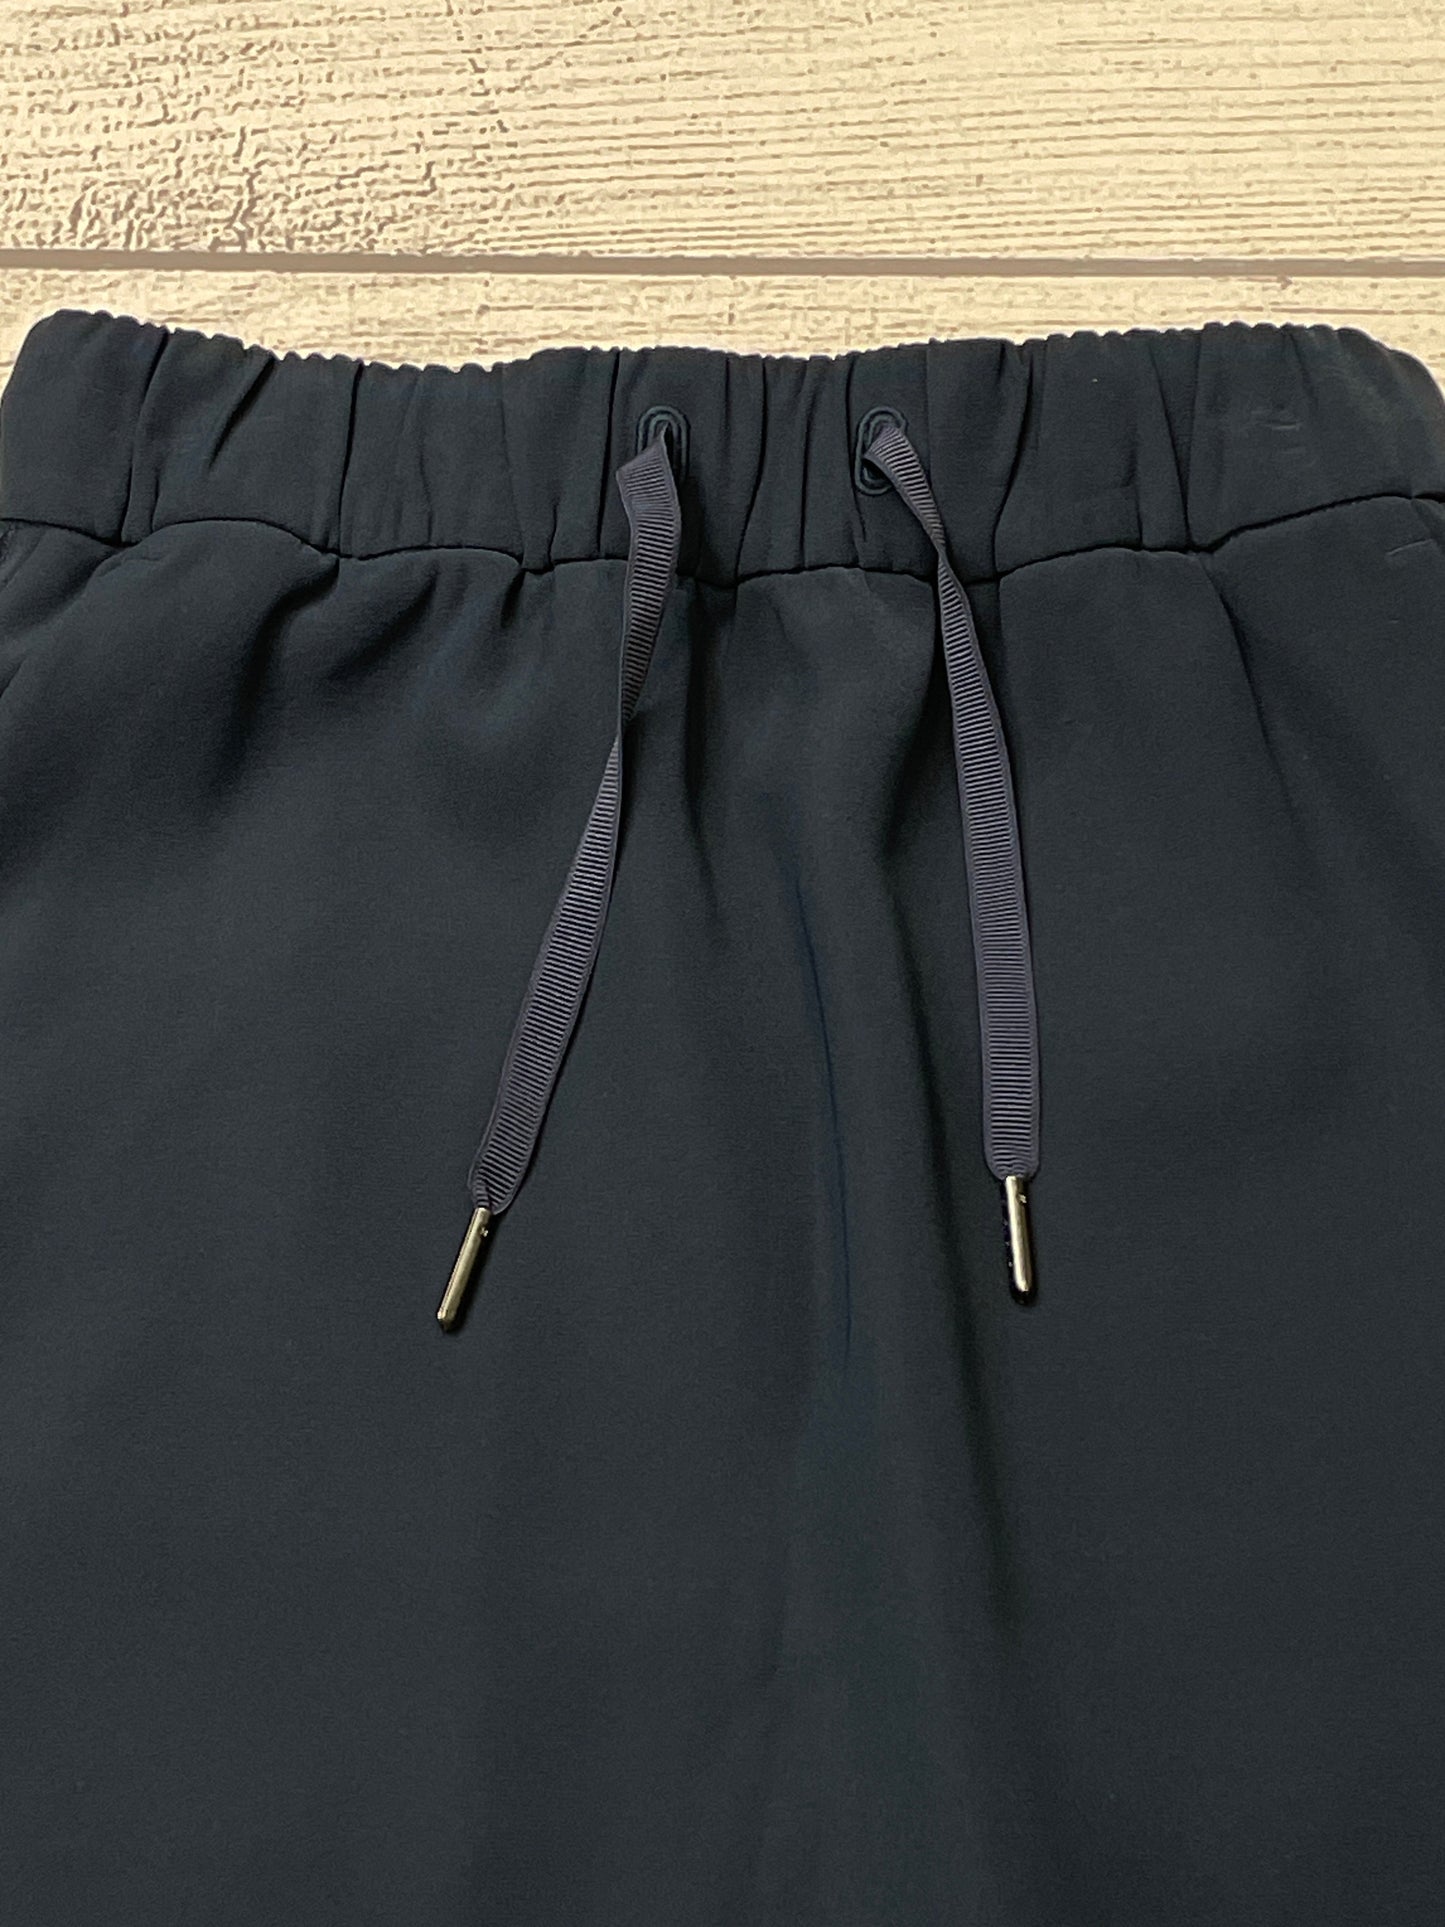 Navy Athletic Skirt Skort Lululemon, Size Xs